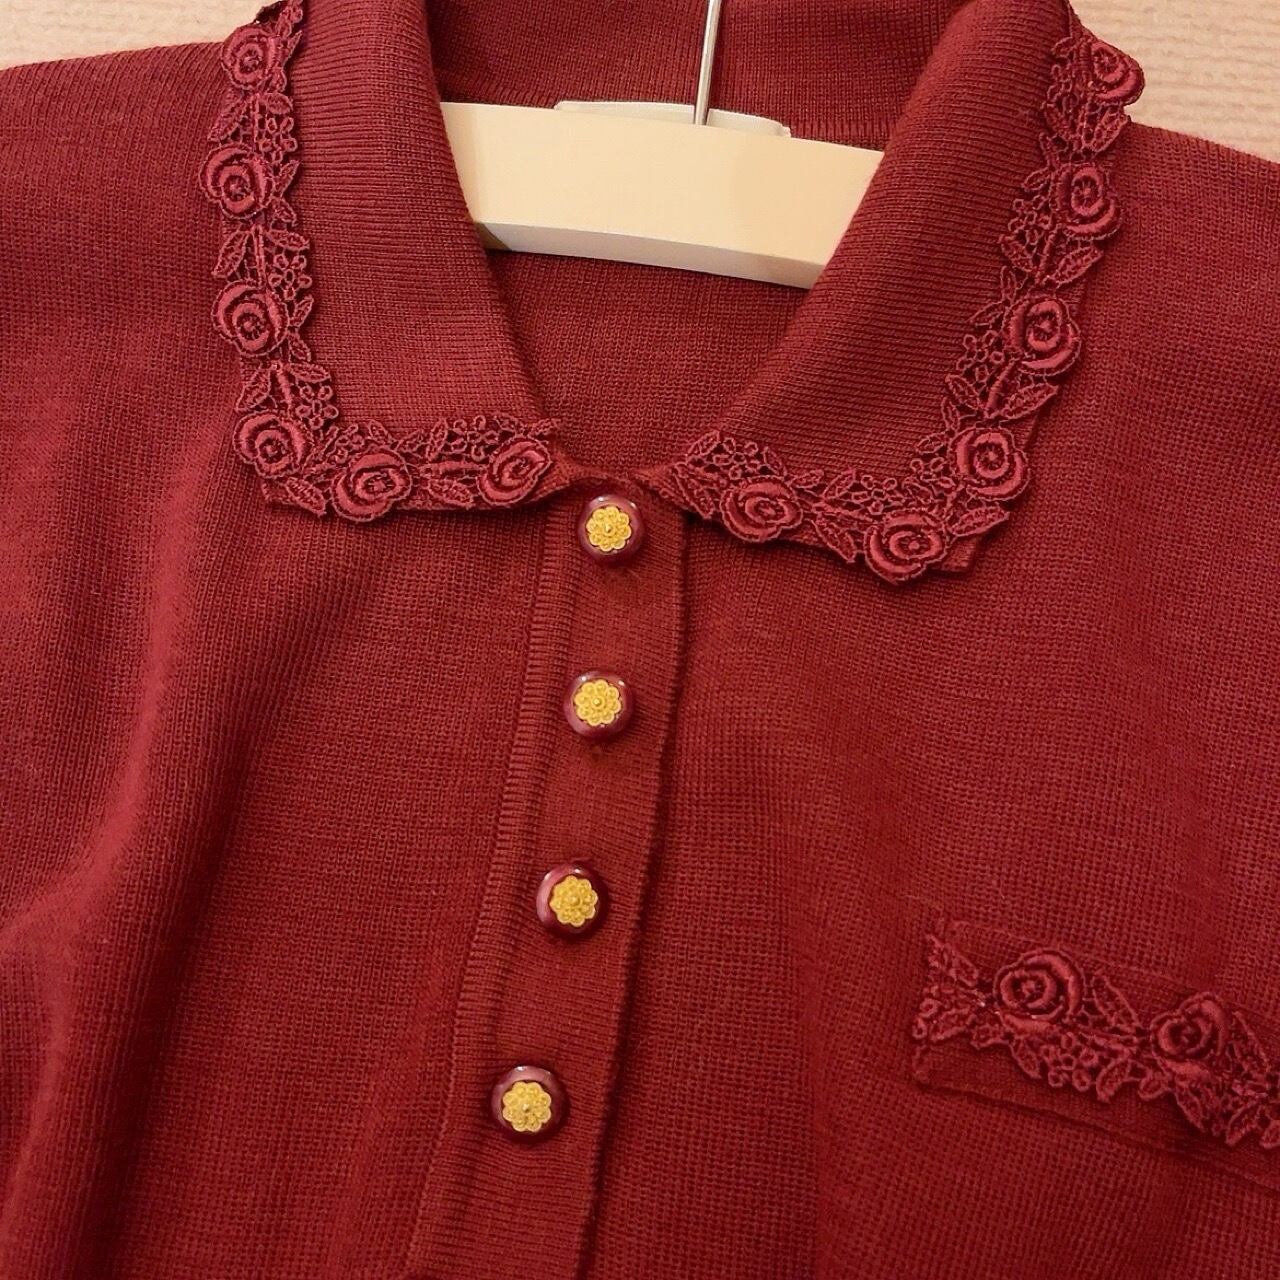 rose lace collar bordeaux knit polo